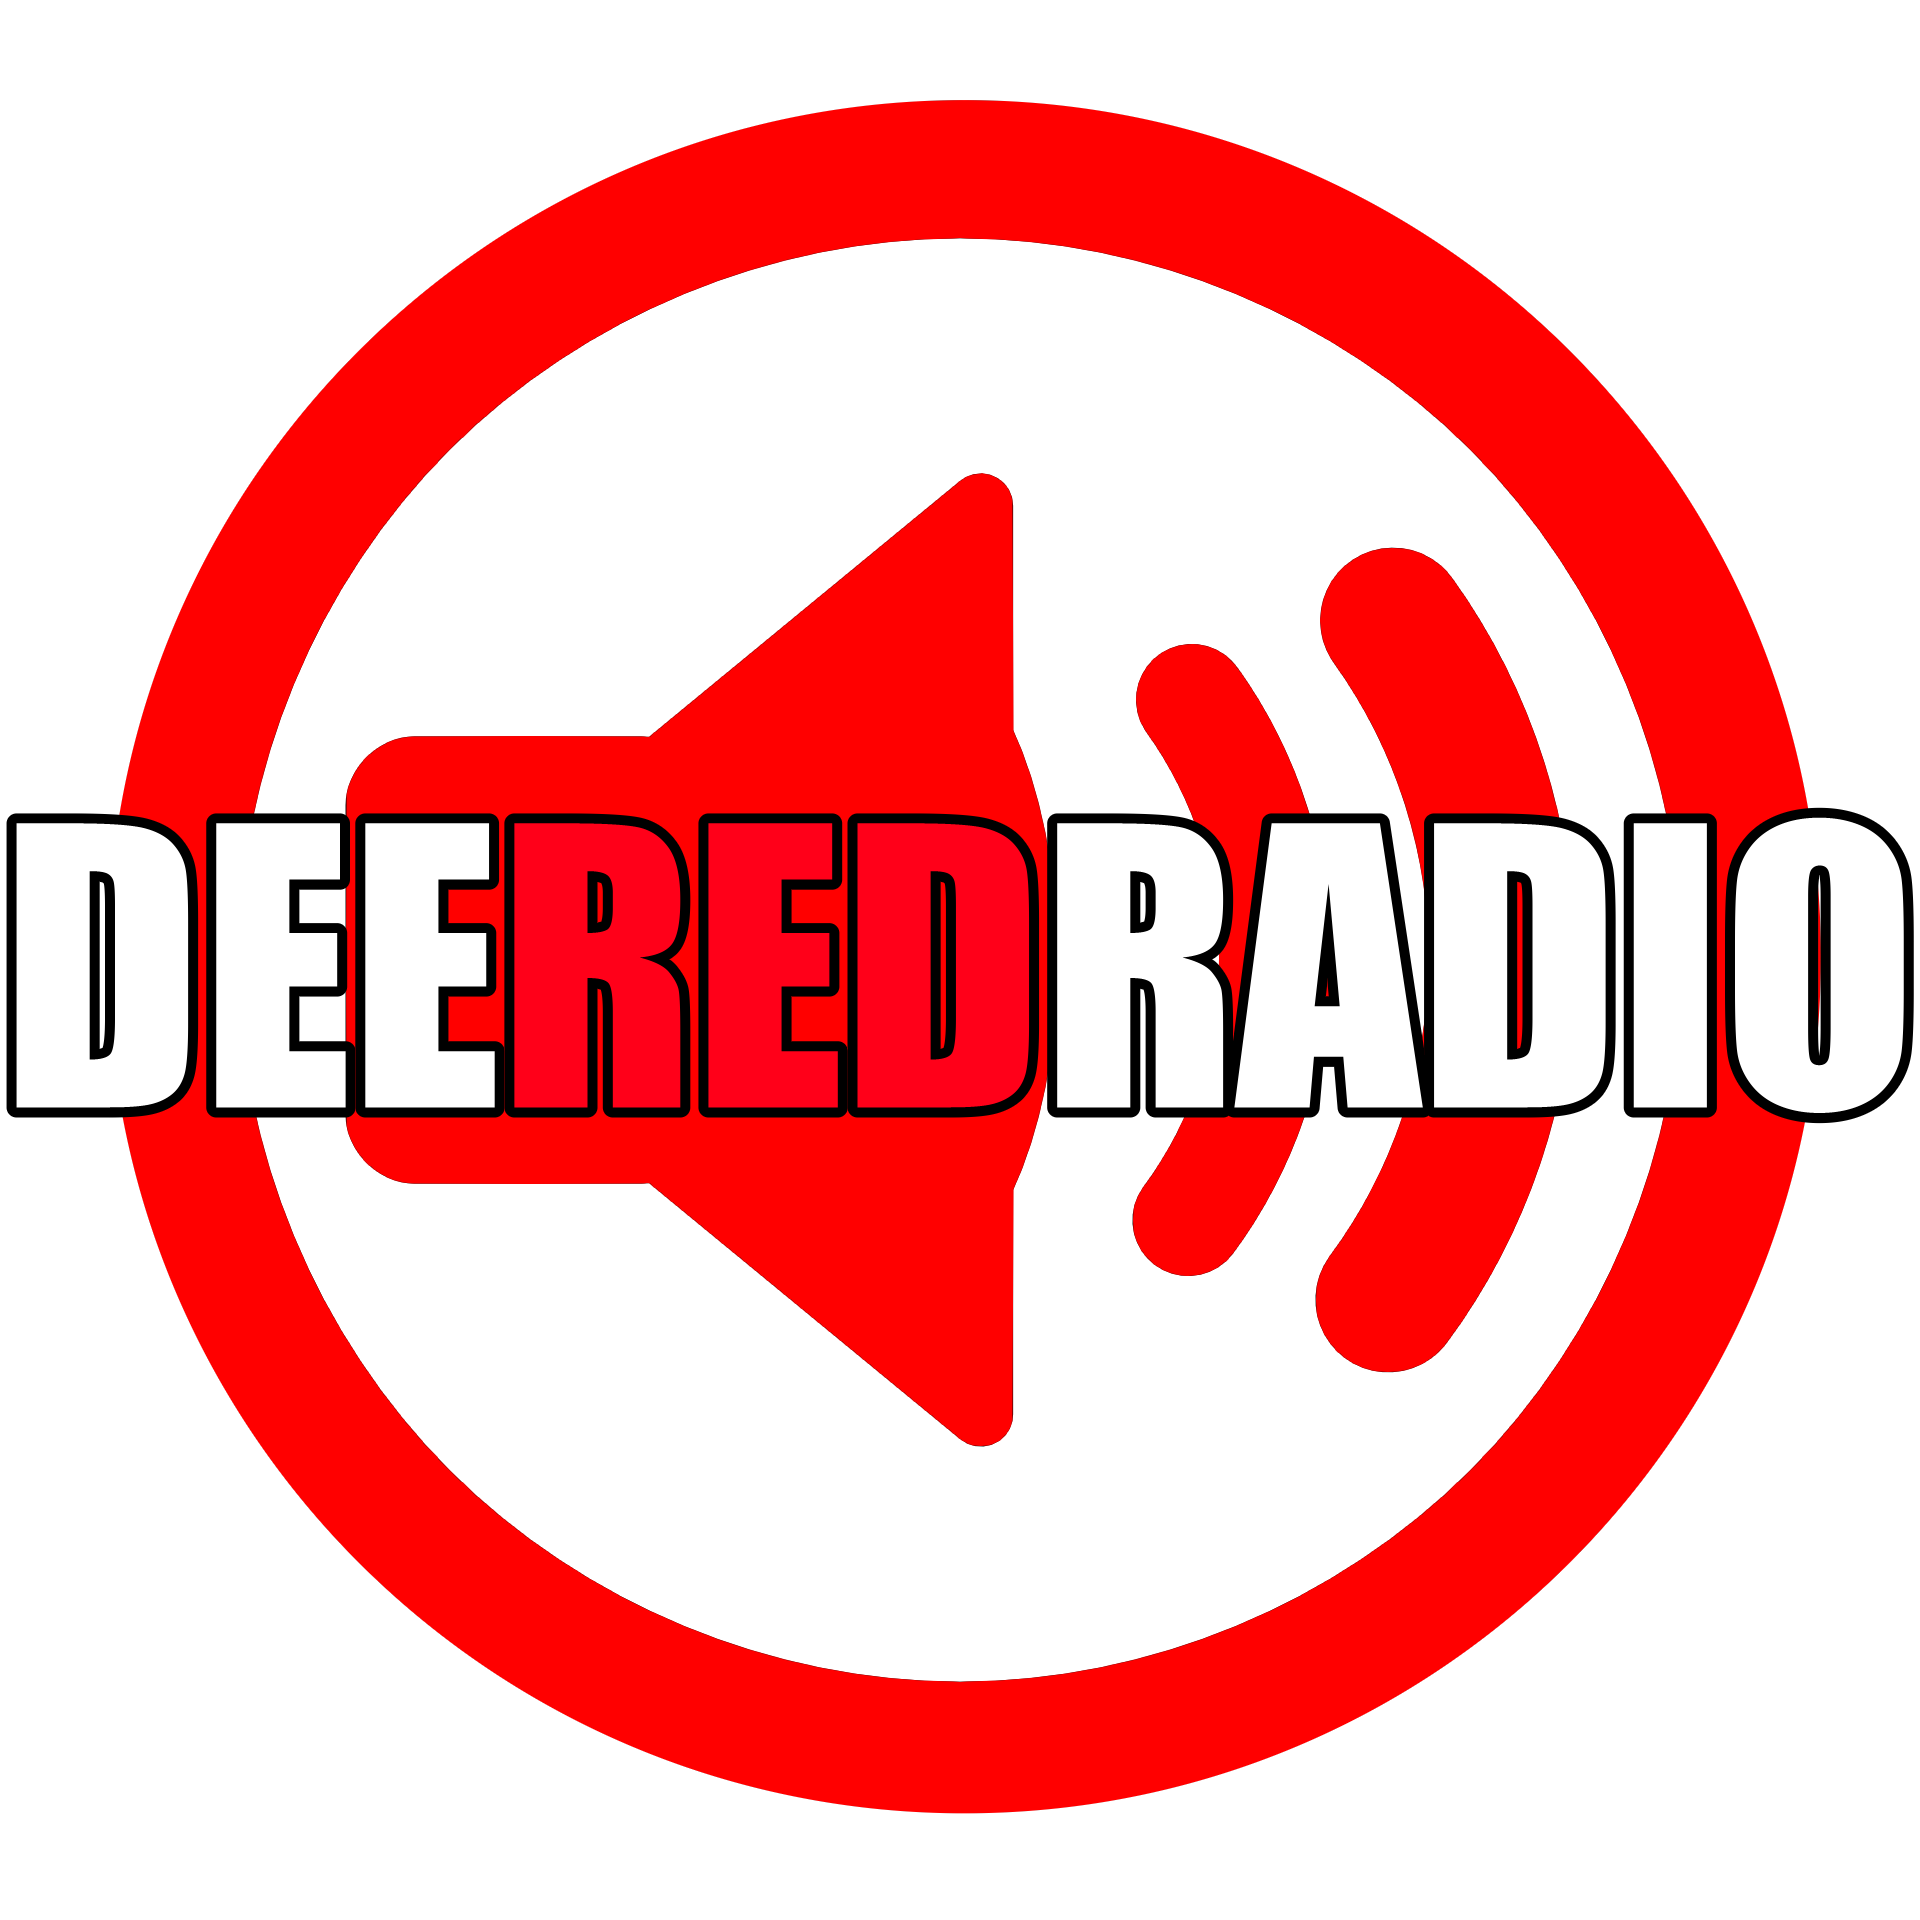 RED-Zone - DEEREDRADIO